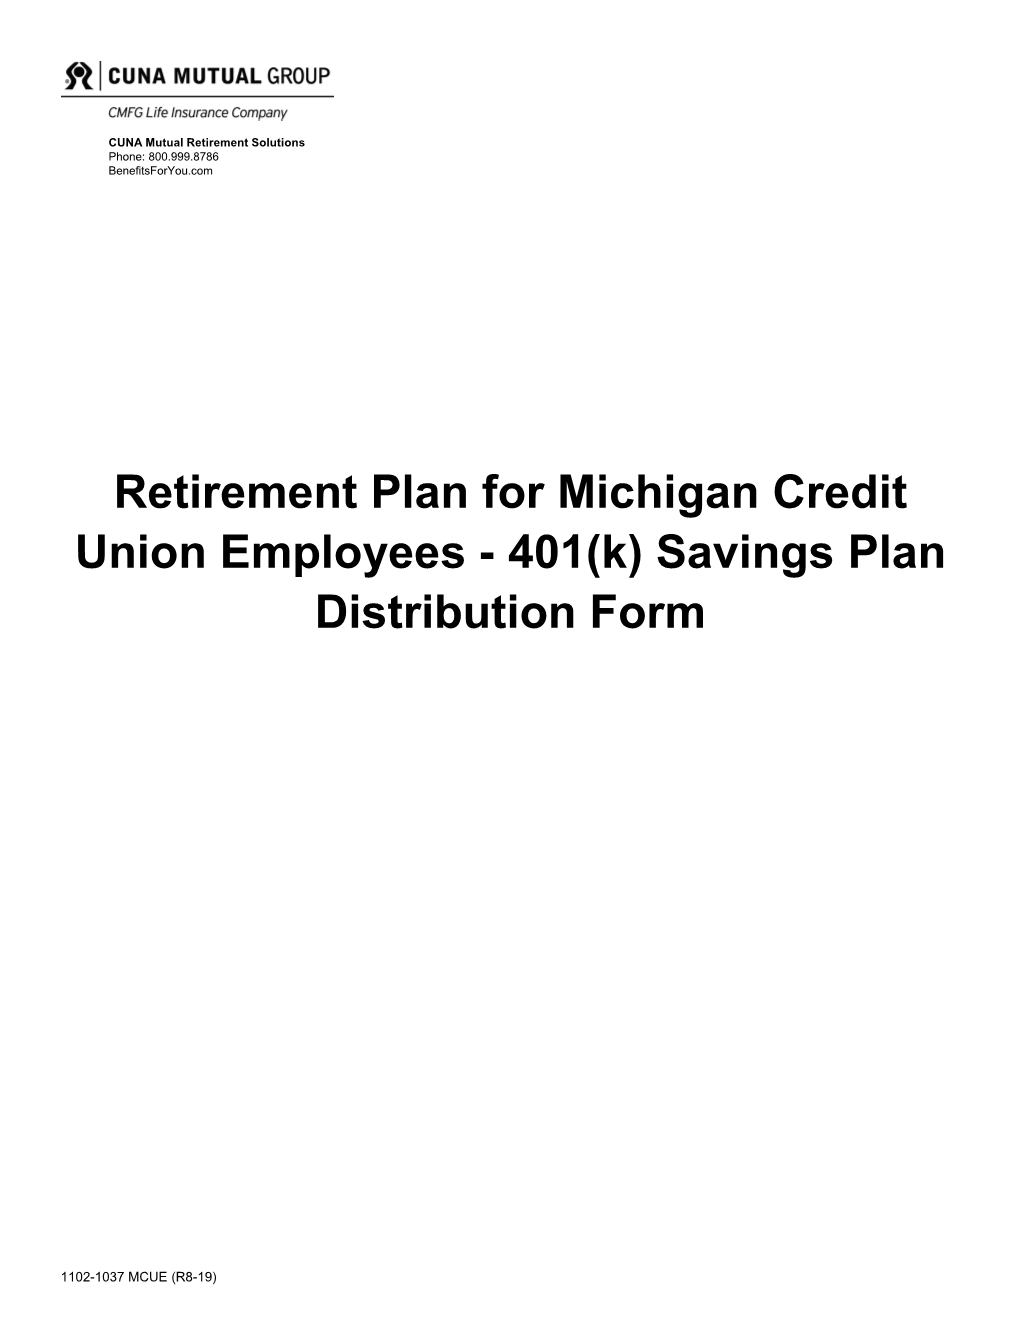 Retirement Plan for Michigan Credit Union Employees - 401(K) Savings Plan Distribution Form